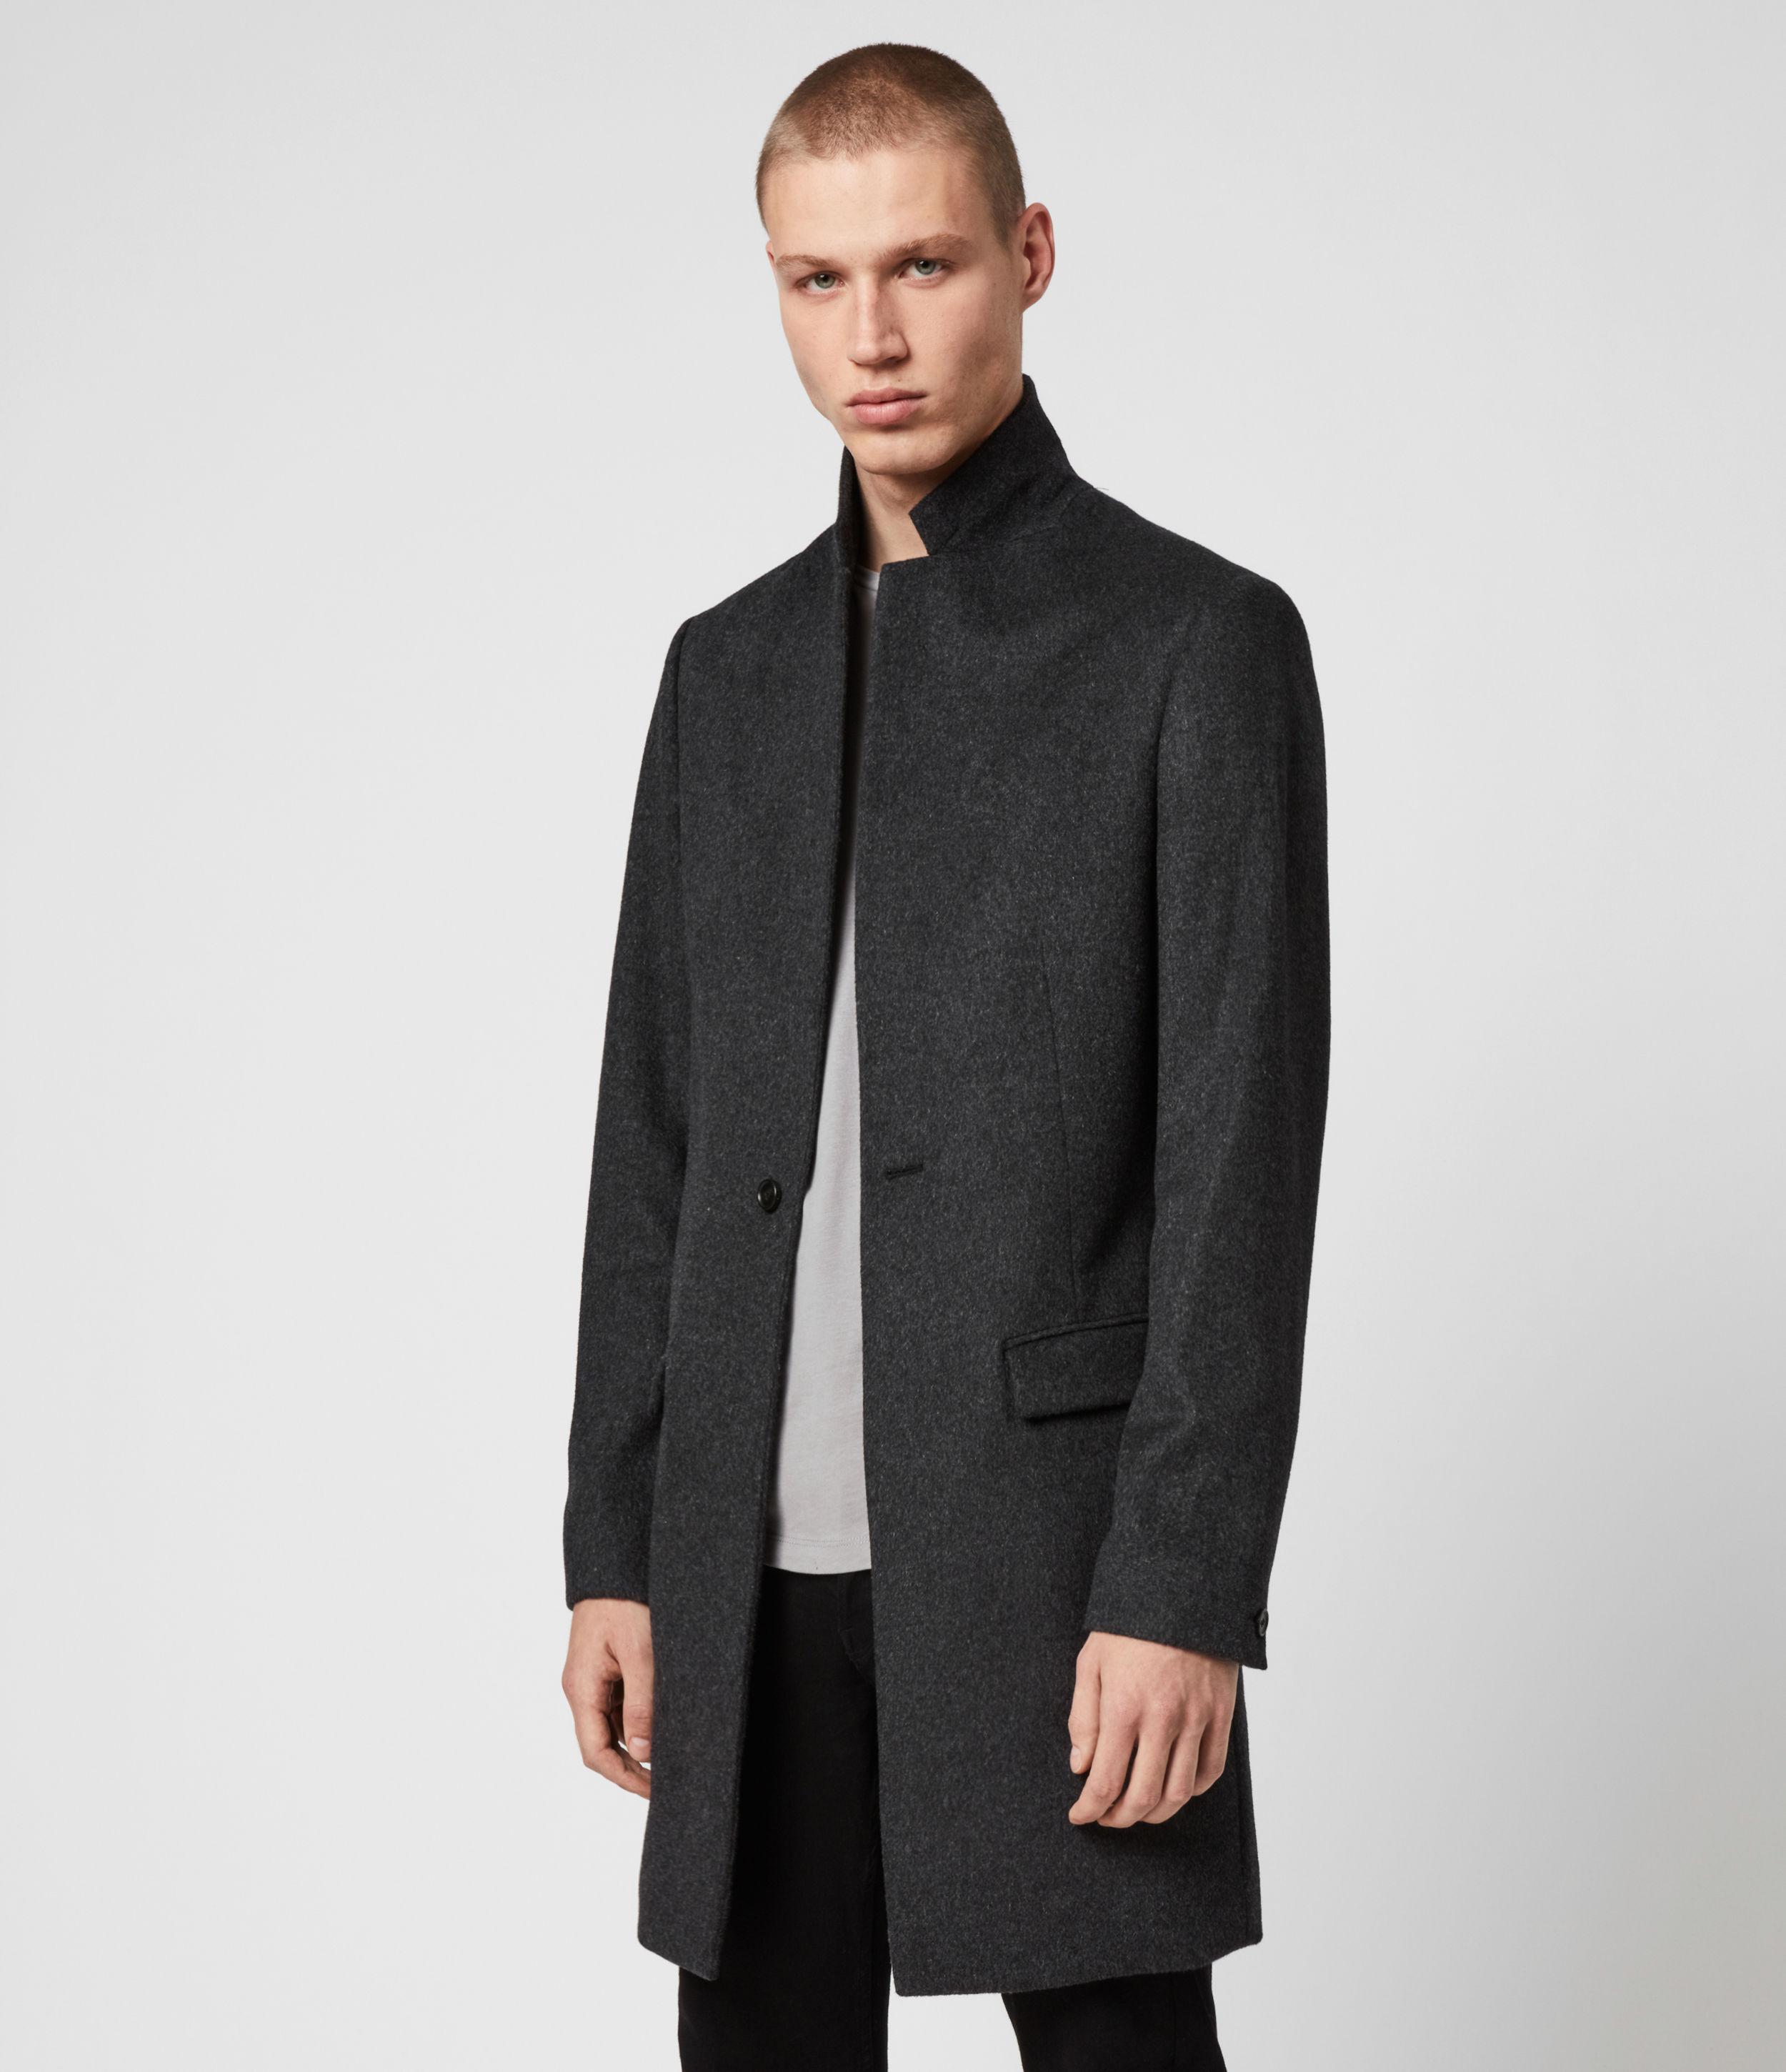 AllSaints Men's Wool Slim Fit Bodell Coat in Black for Men - Lyst